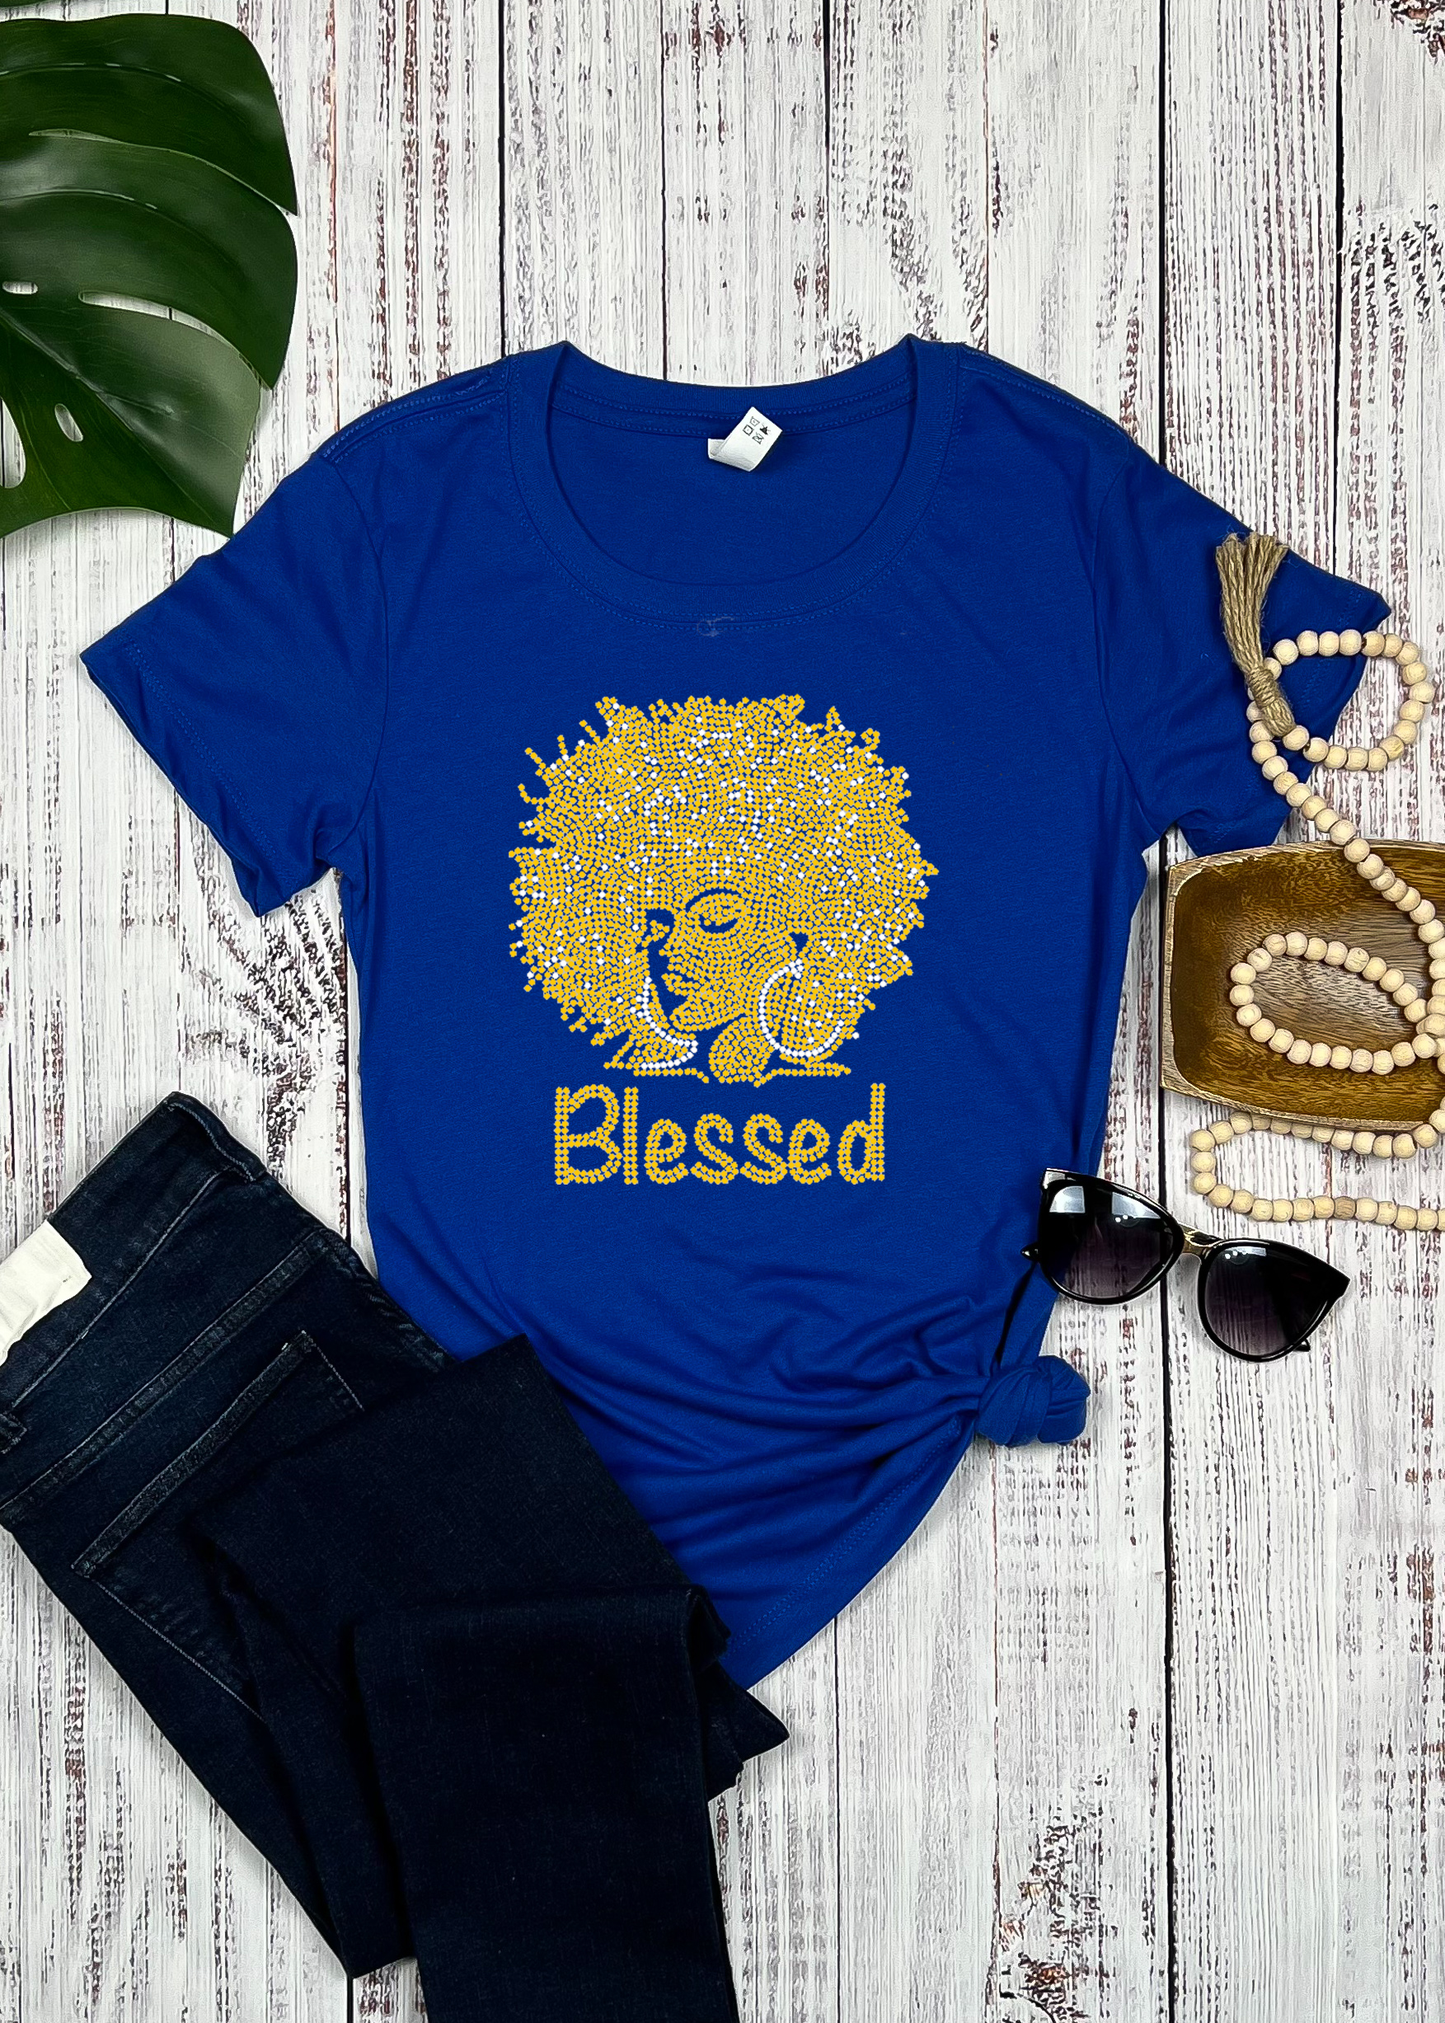 Afro blessed Rhinestone T-Shirt.